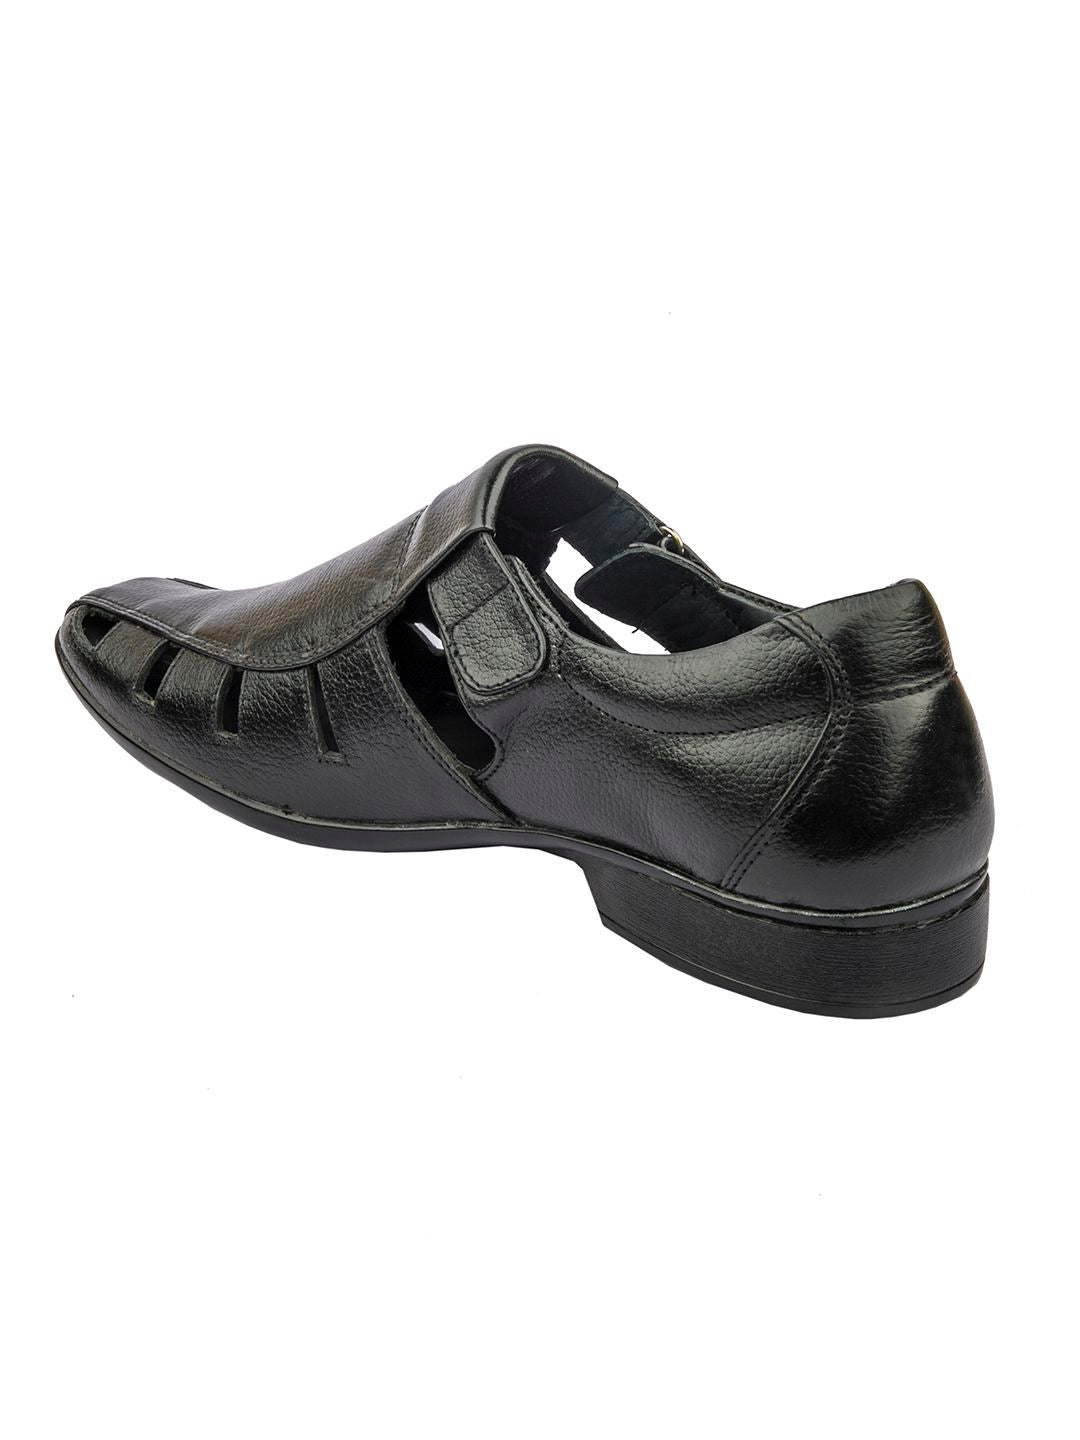 Designer's Elegance: Handmade Black Leather Sandals for Men